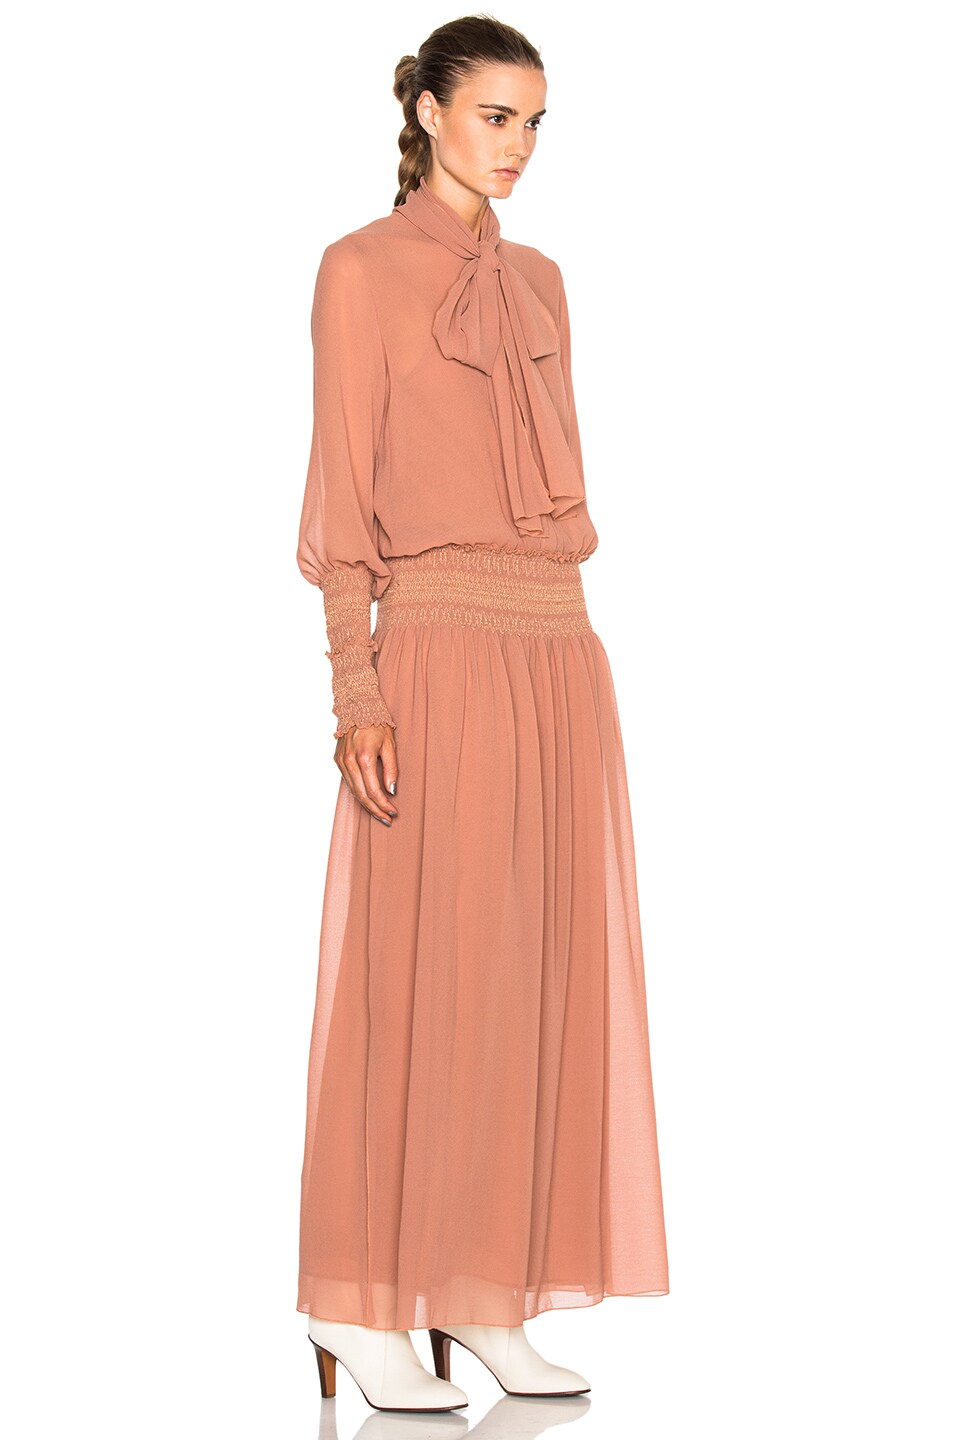 See By Chloe Long Sleeve Maxi Dress in Dusty Pink | FWRD